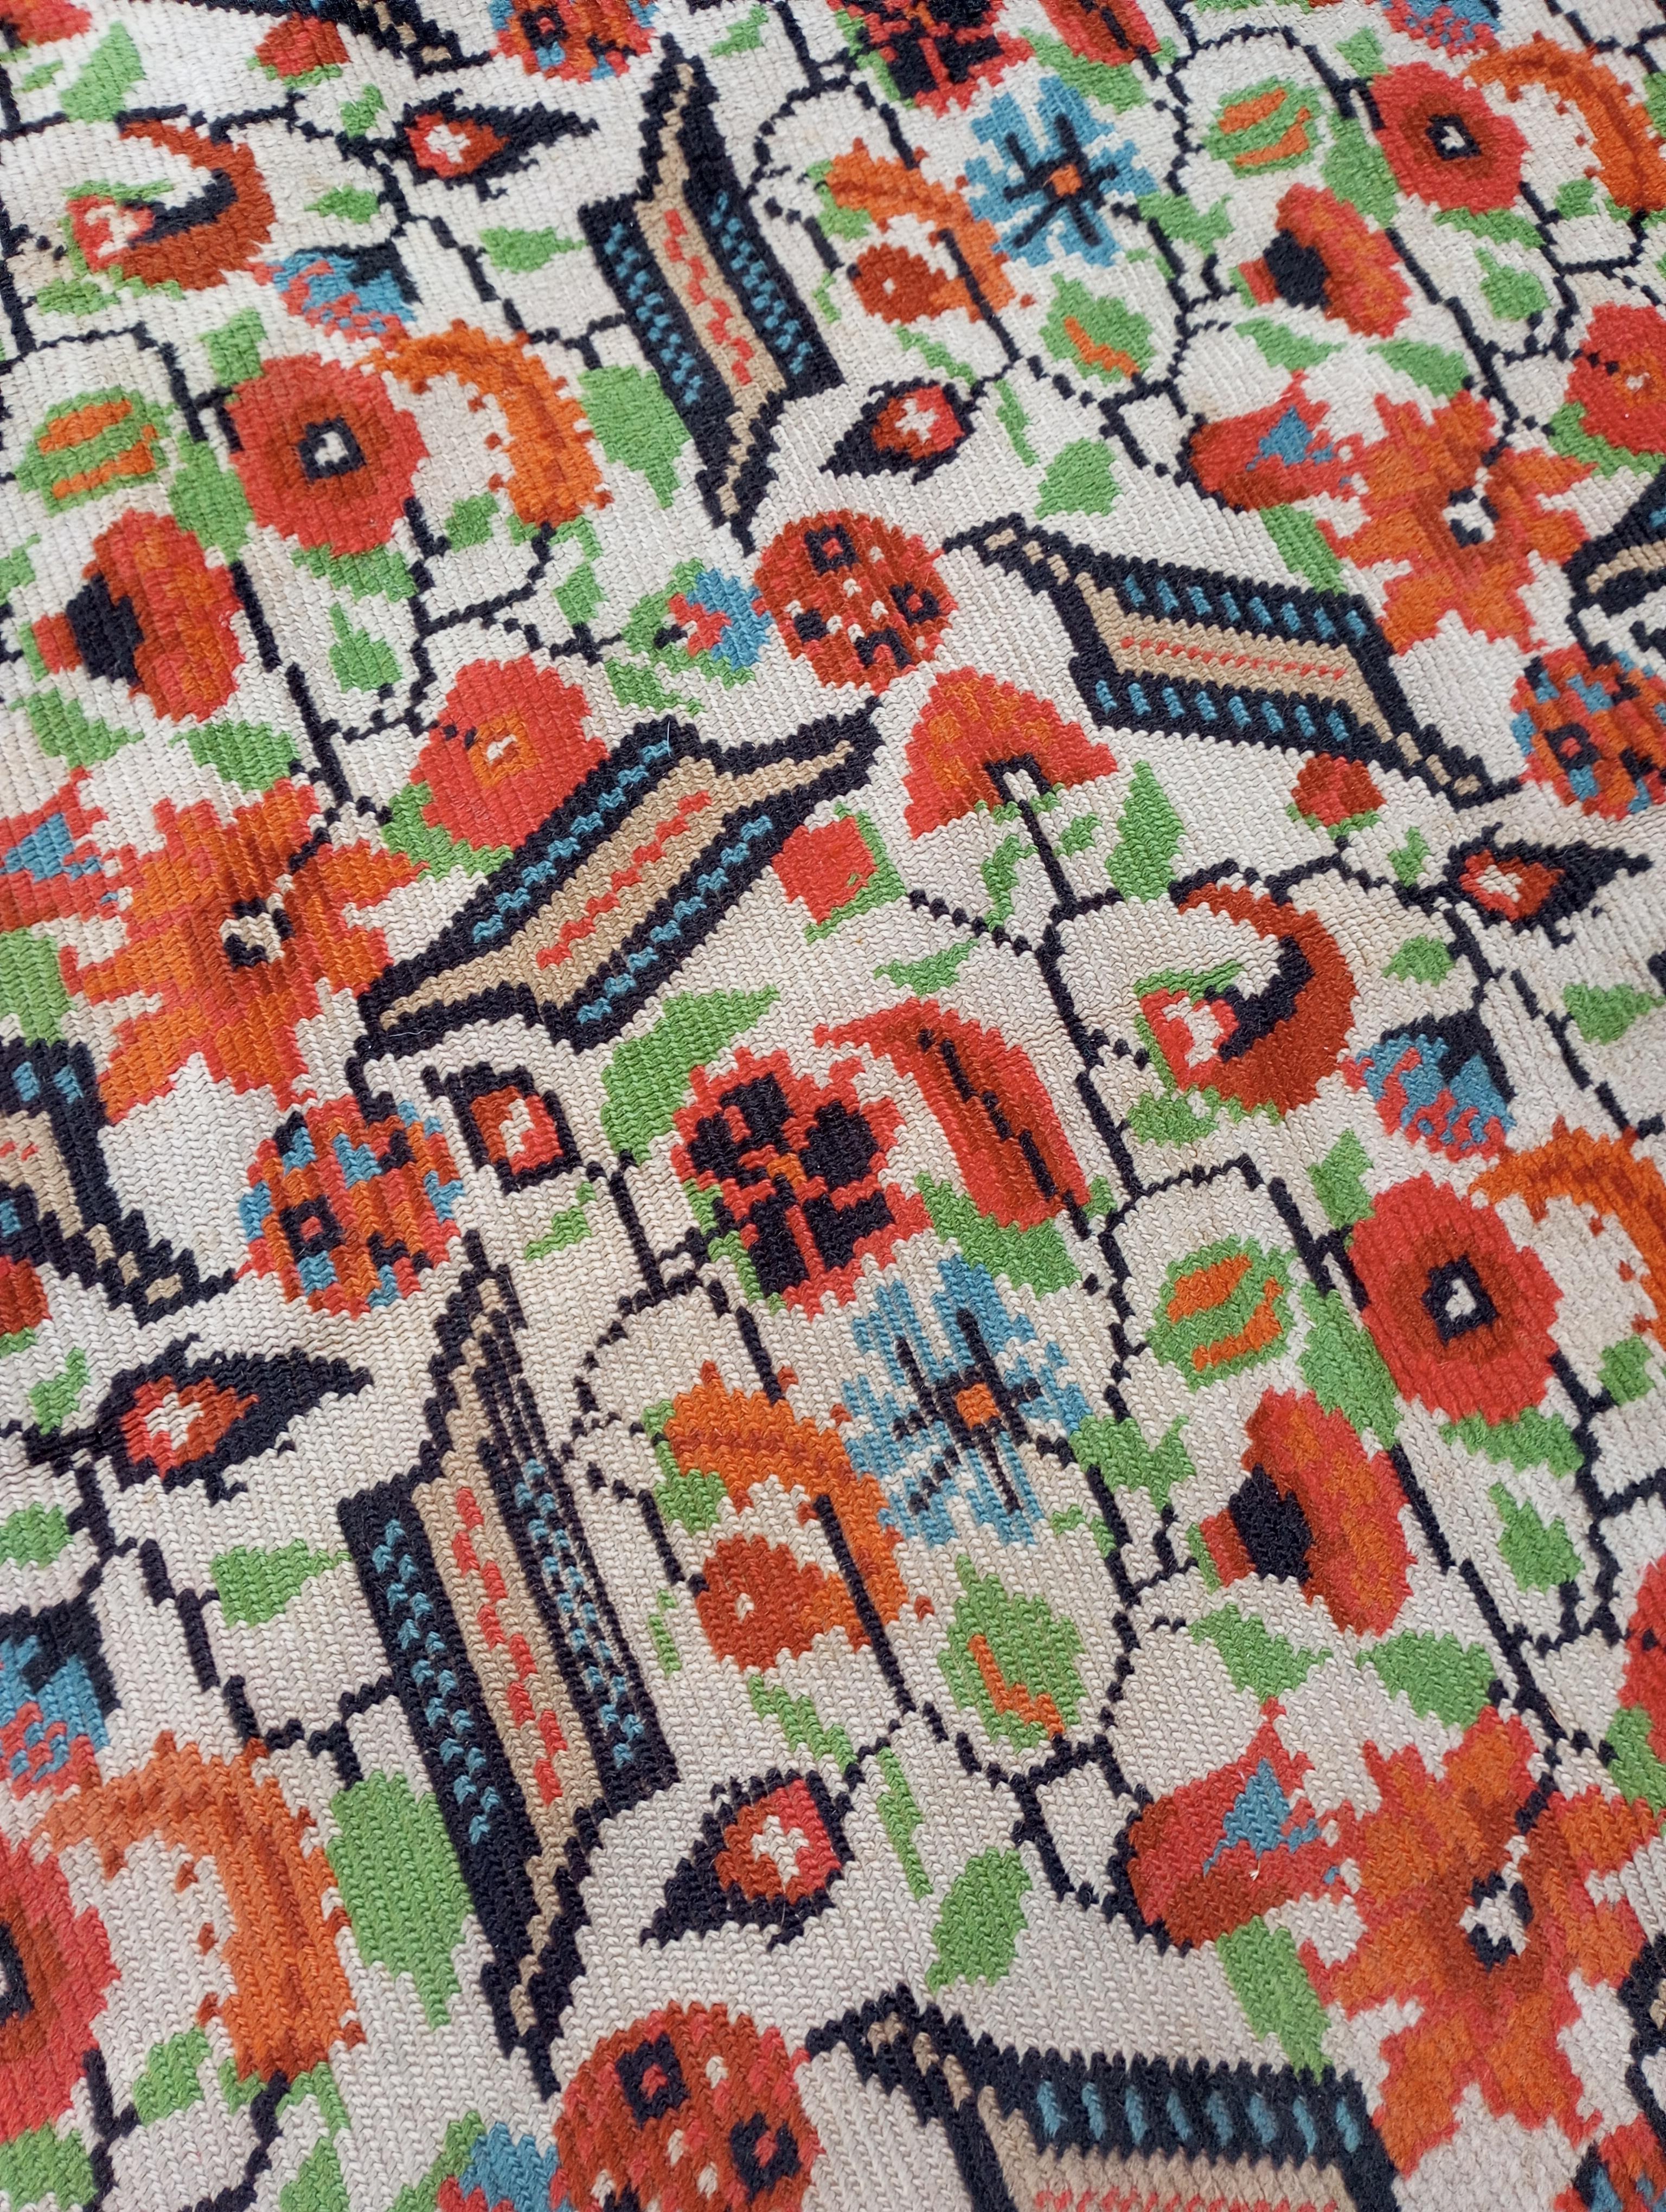 Mid-20th Century European Anatolian-style carpet with Ushak design featuring birds (Austria) For Sale